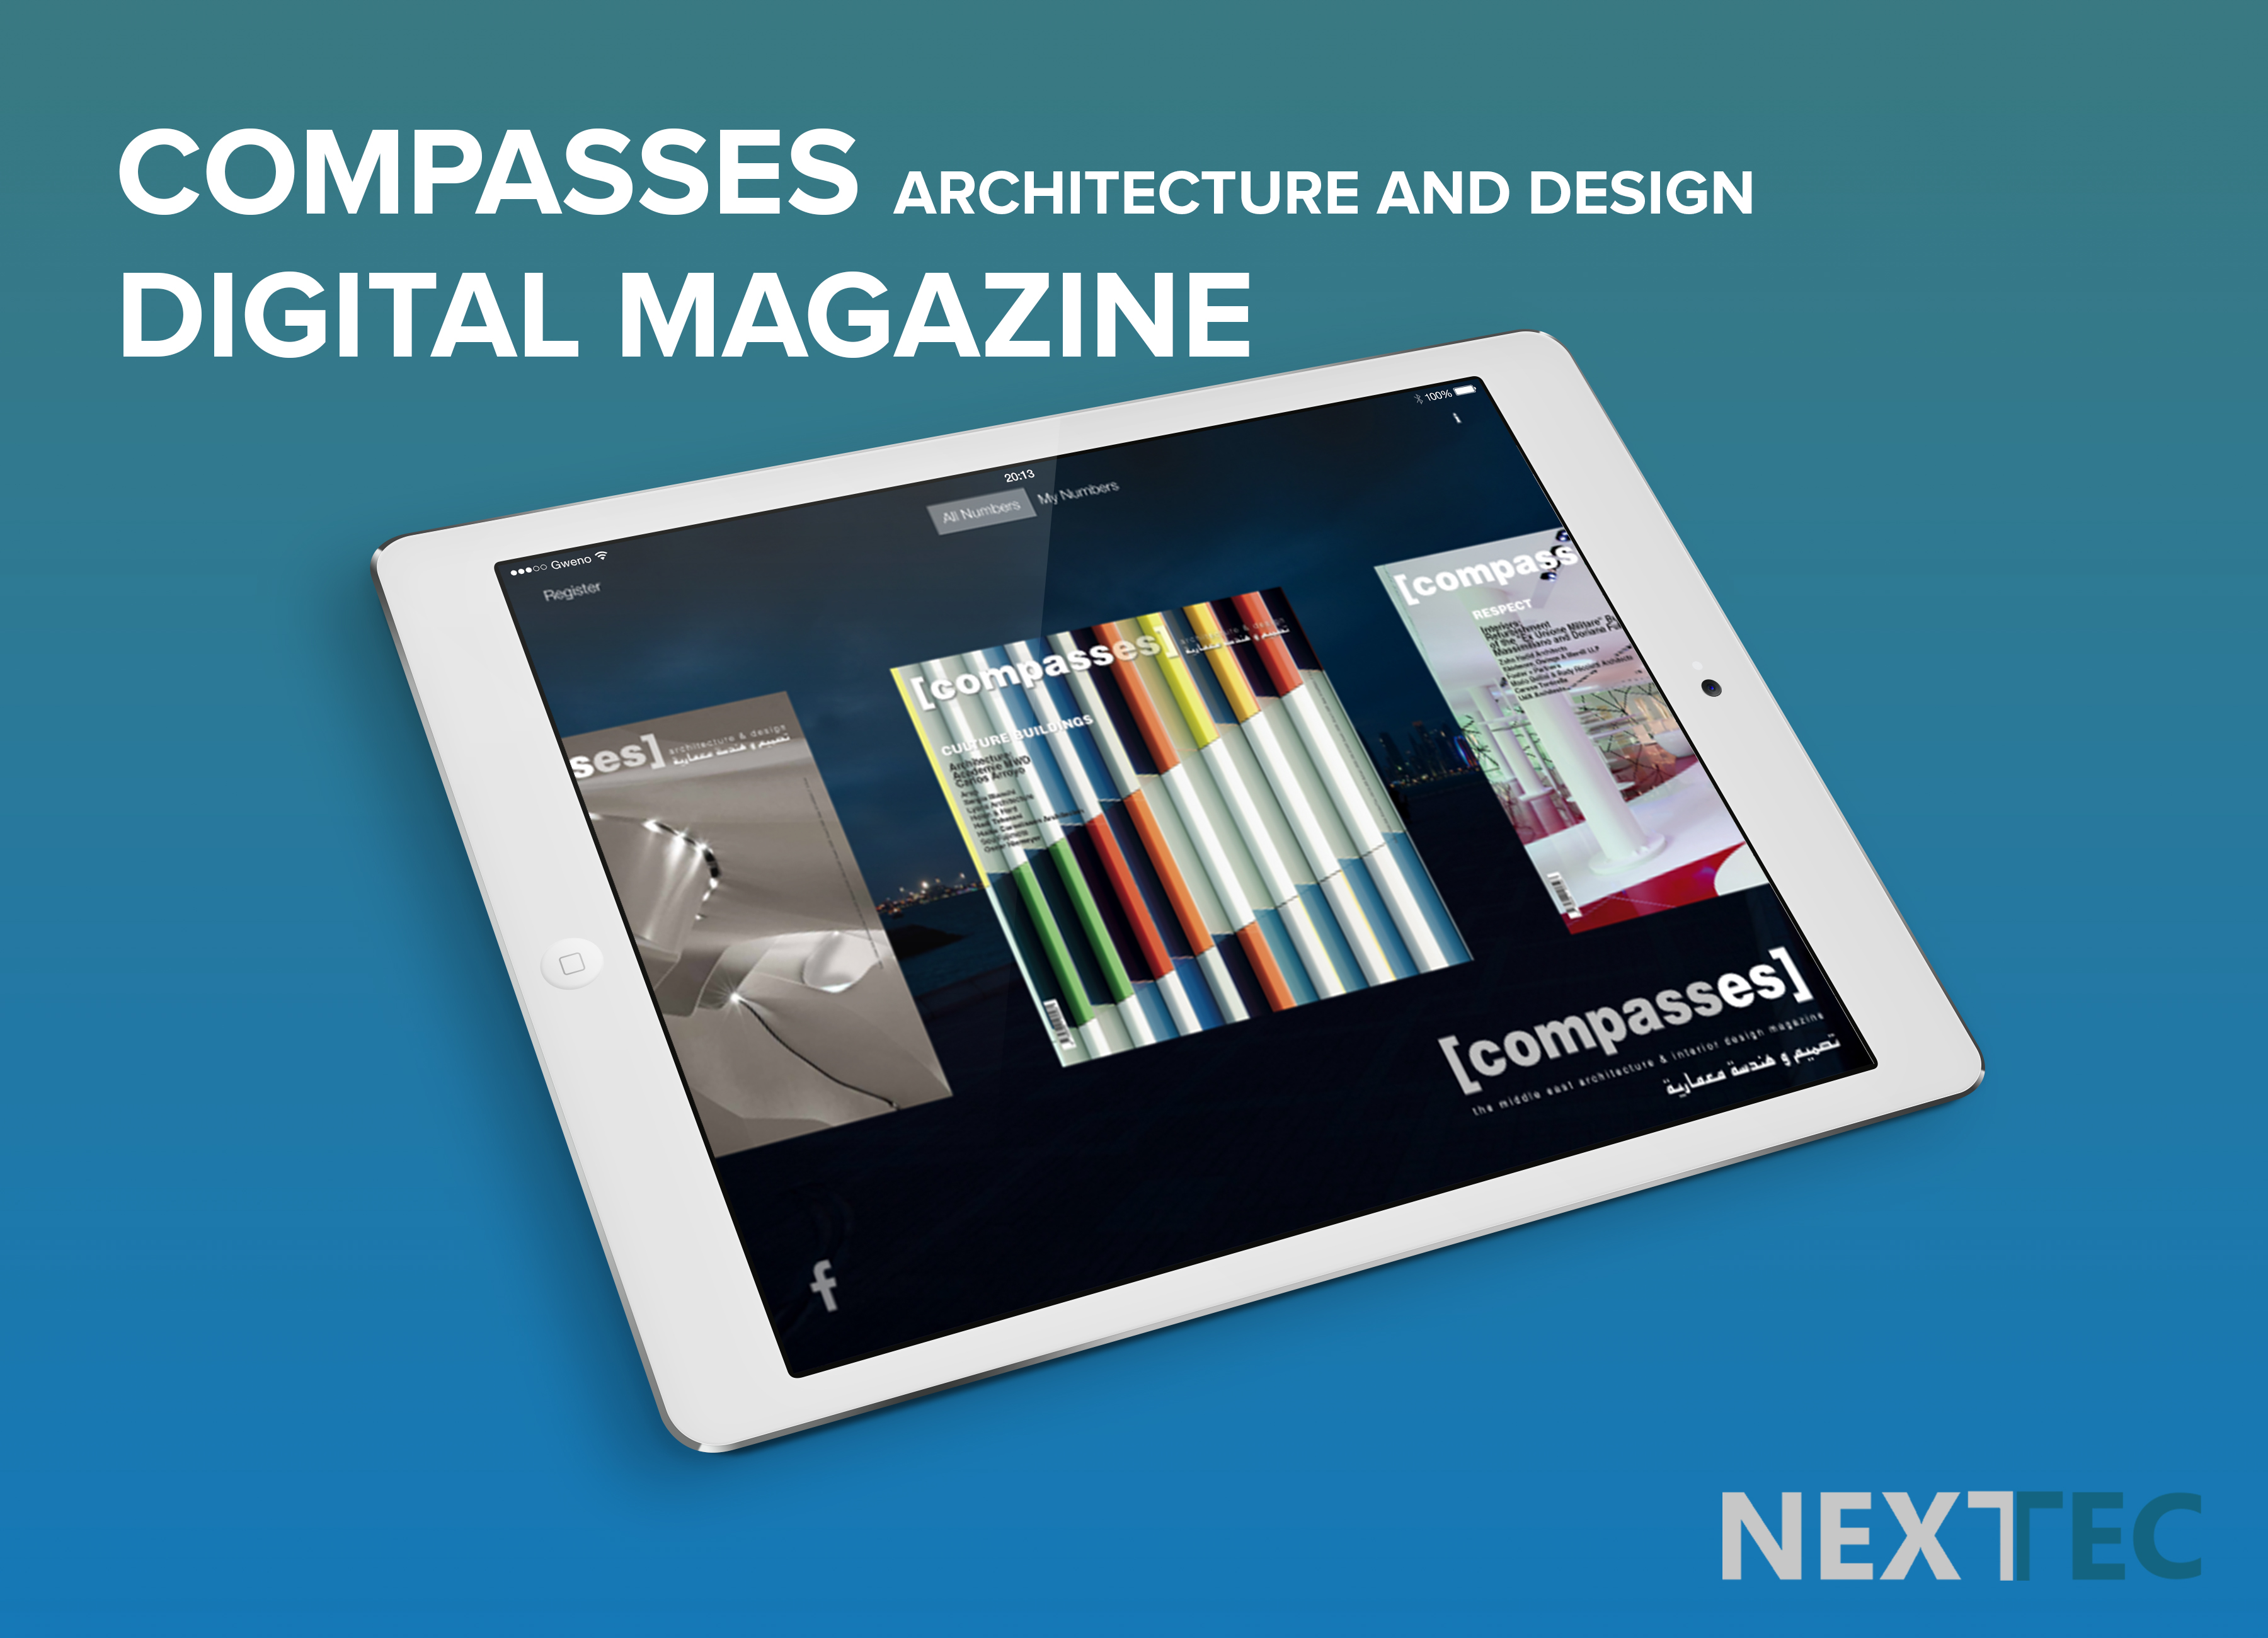 Compasses Architecture and Design